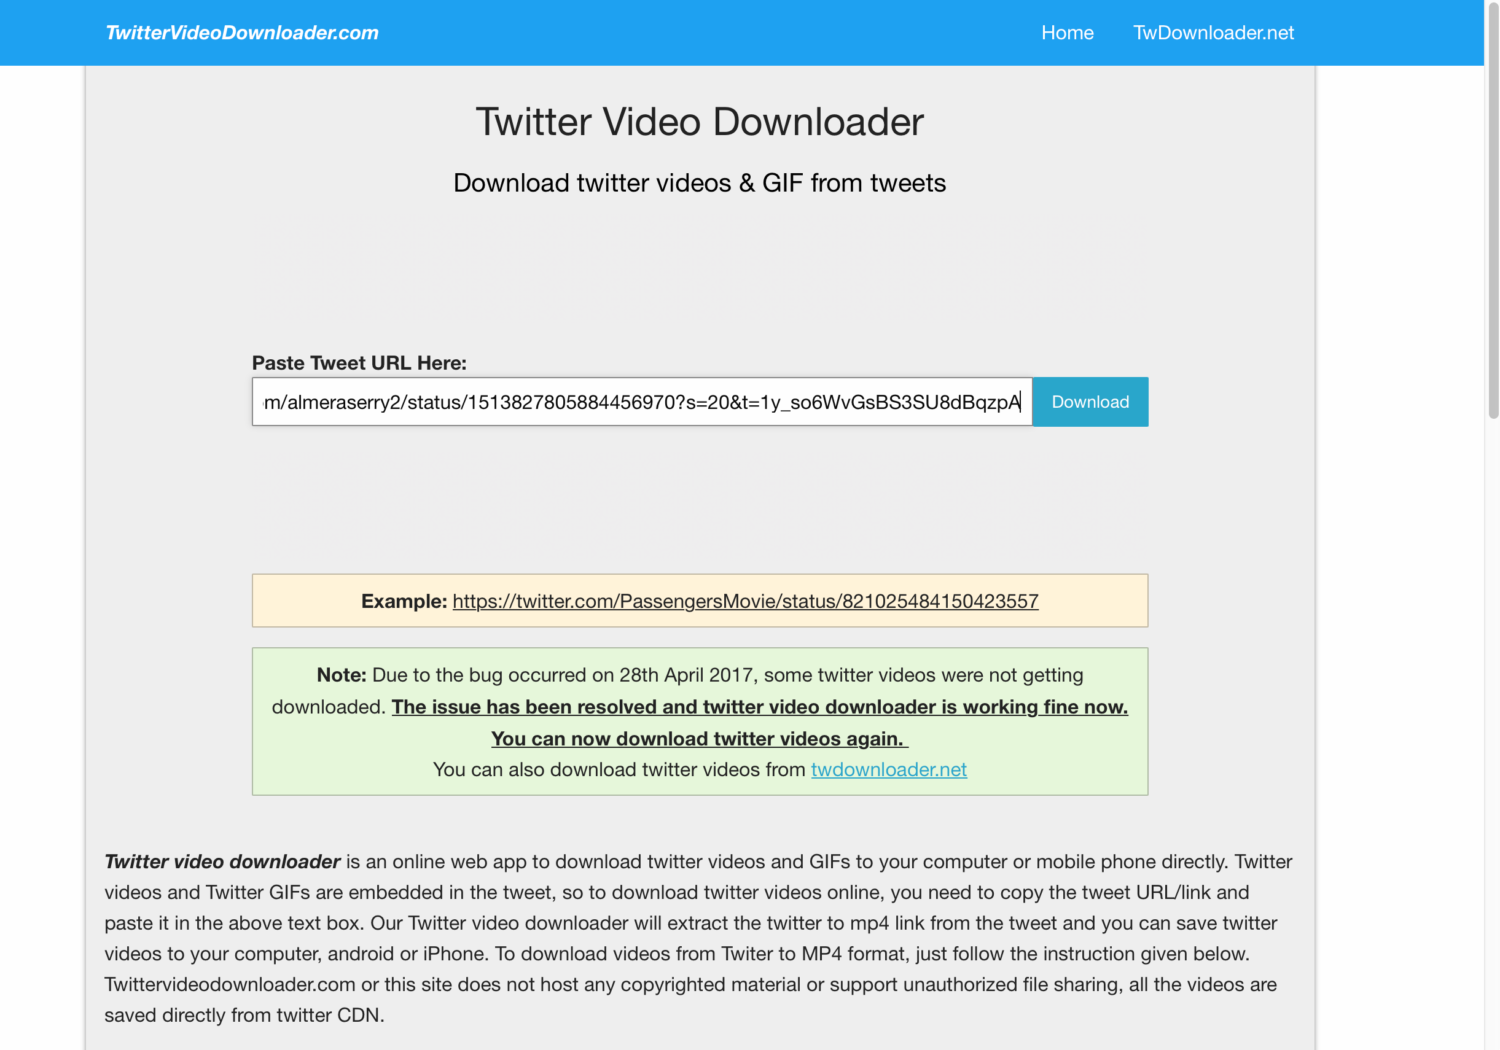 twitter video downloader download free videos